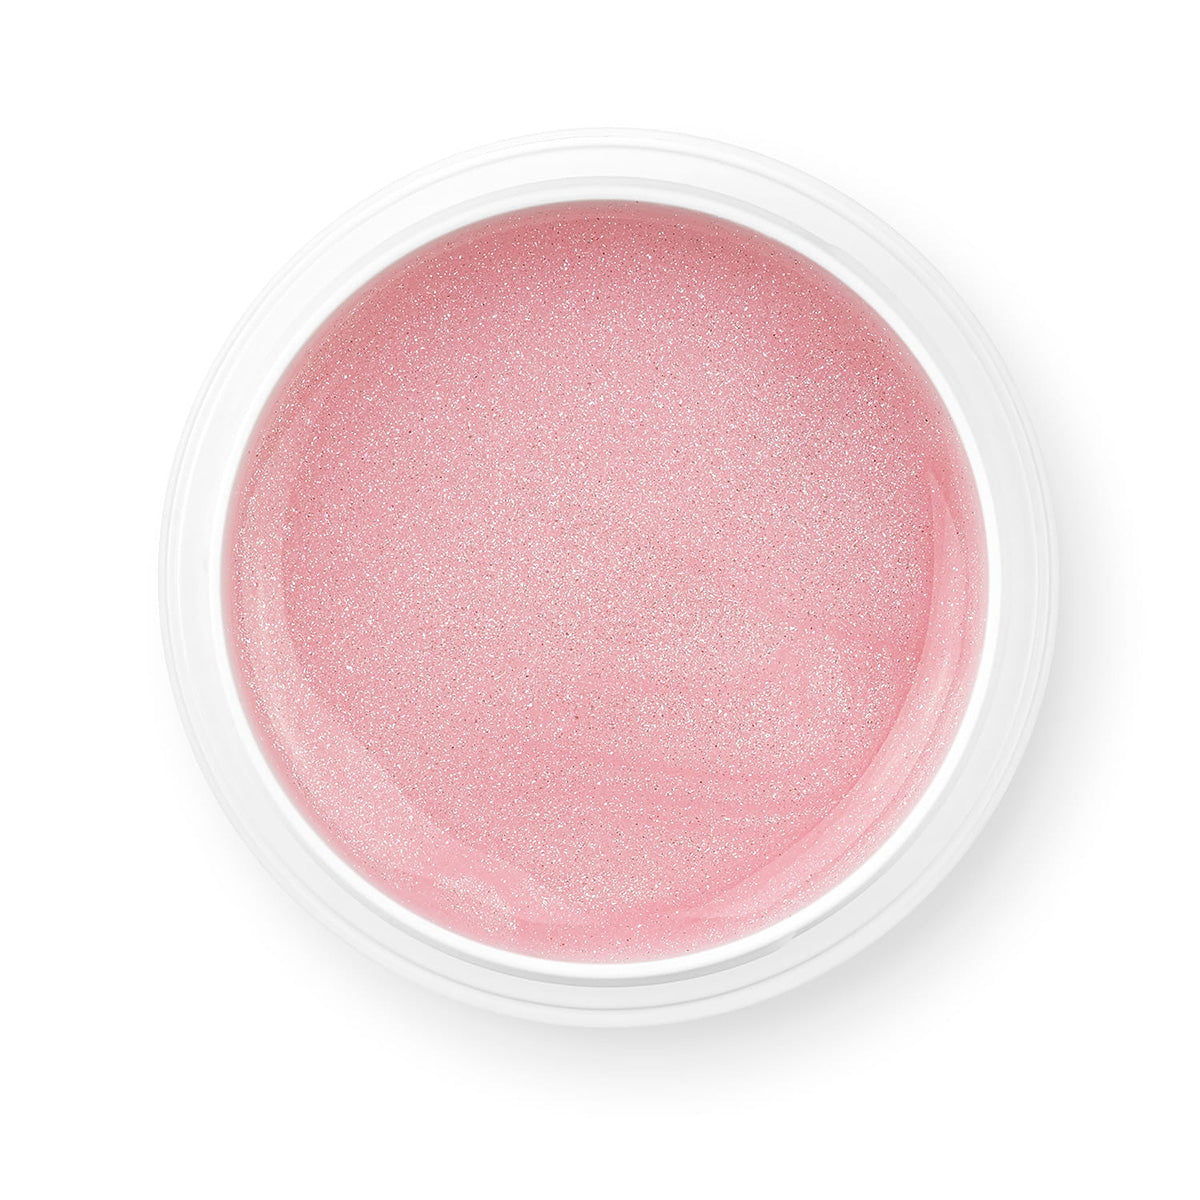 Claresa Soft&Easy bouwgel glam roze 90g